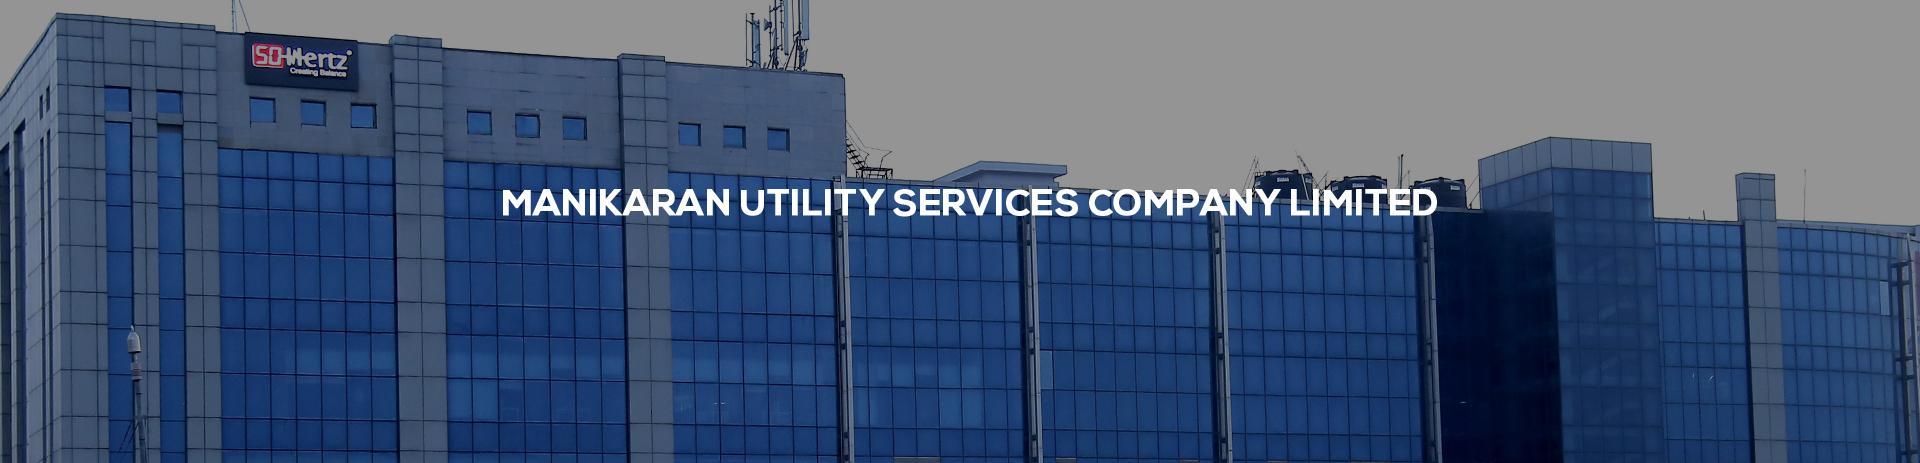 Manikaran Utility Services Company Limited